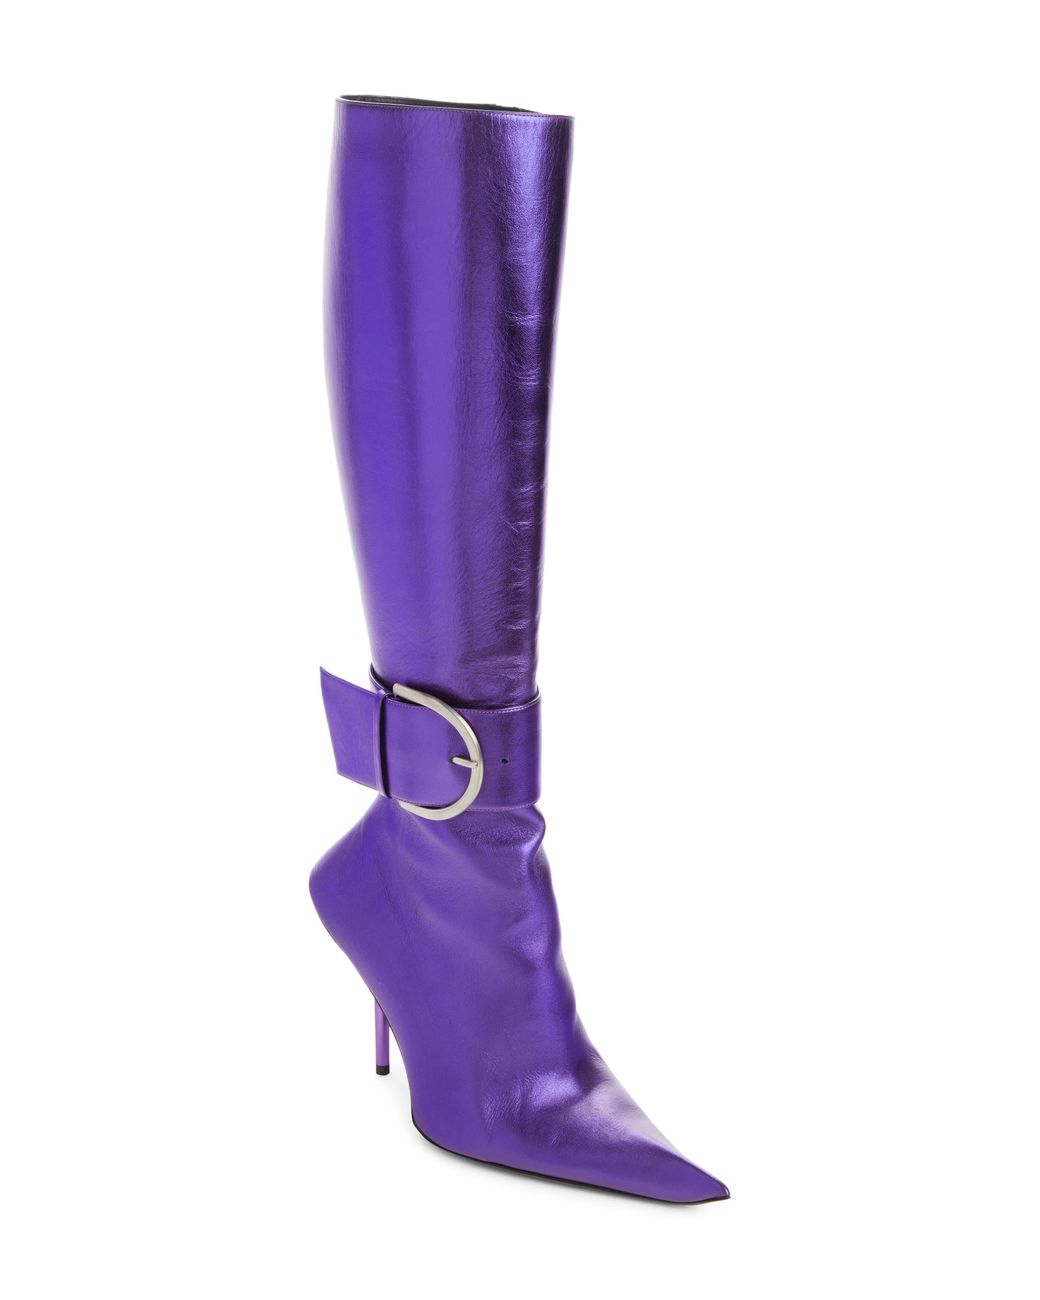 Balenciaga Baleciaga Essex Metallic Pointed Toe Boot in Purple | Lyst